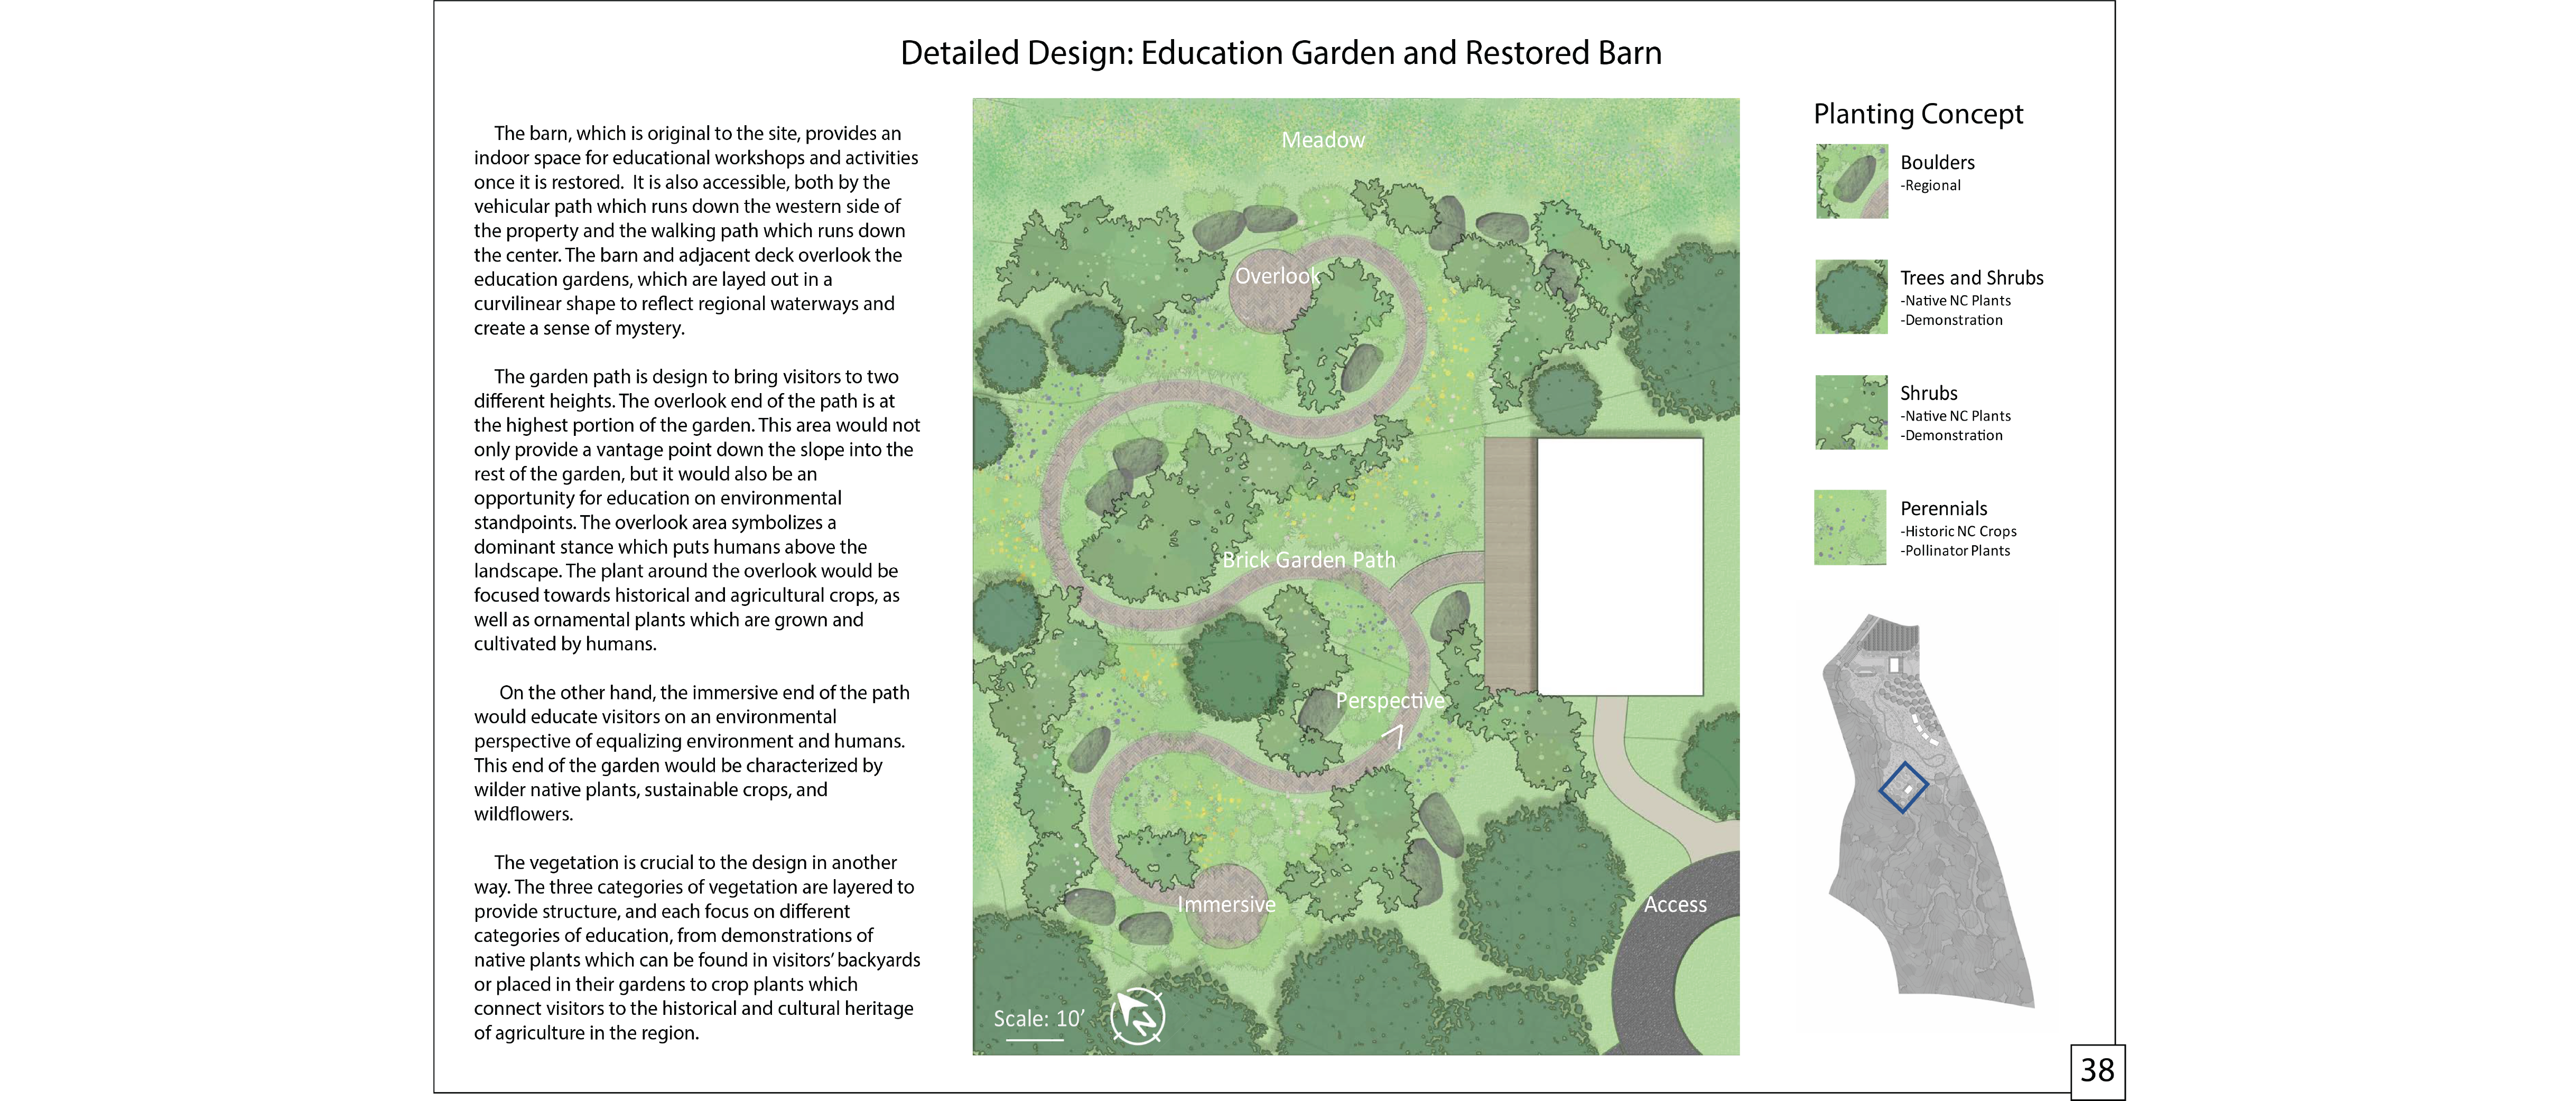 SAHC Regional Master Plan and Community Farm Design | Molly Foote | LARC 351 | Professor Browning